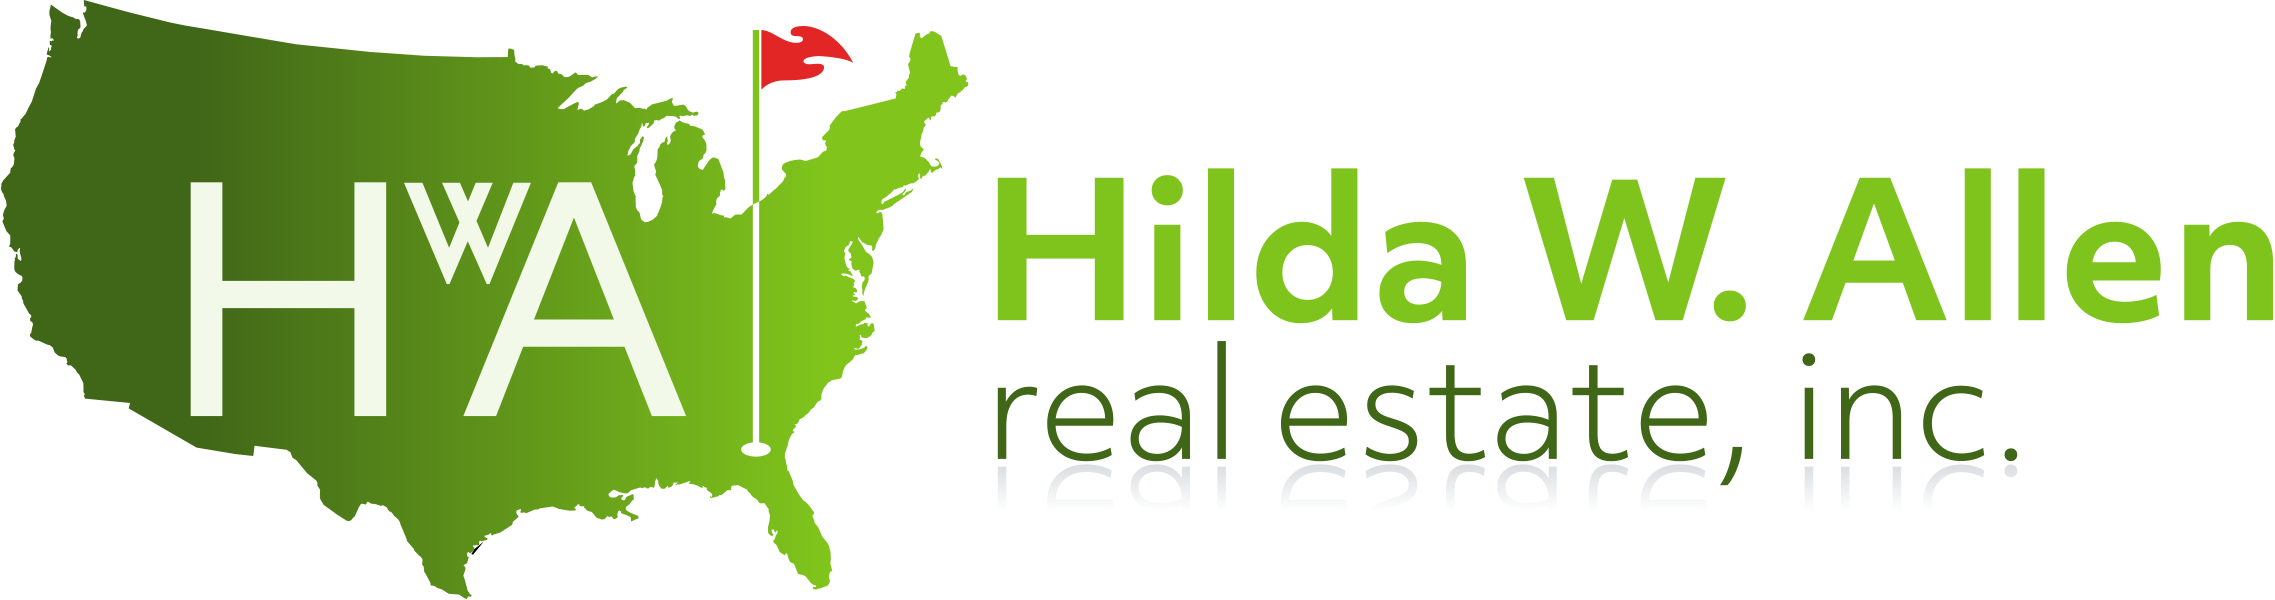 Hilda W. Allen Real Estate, Inc.